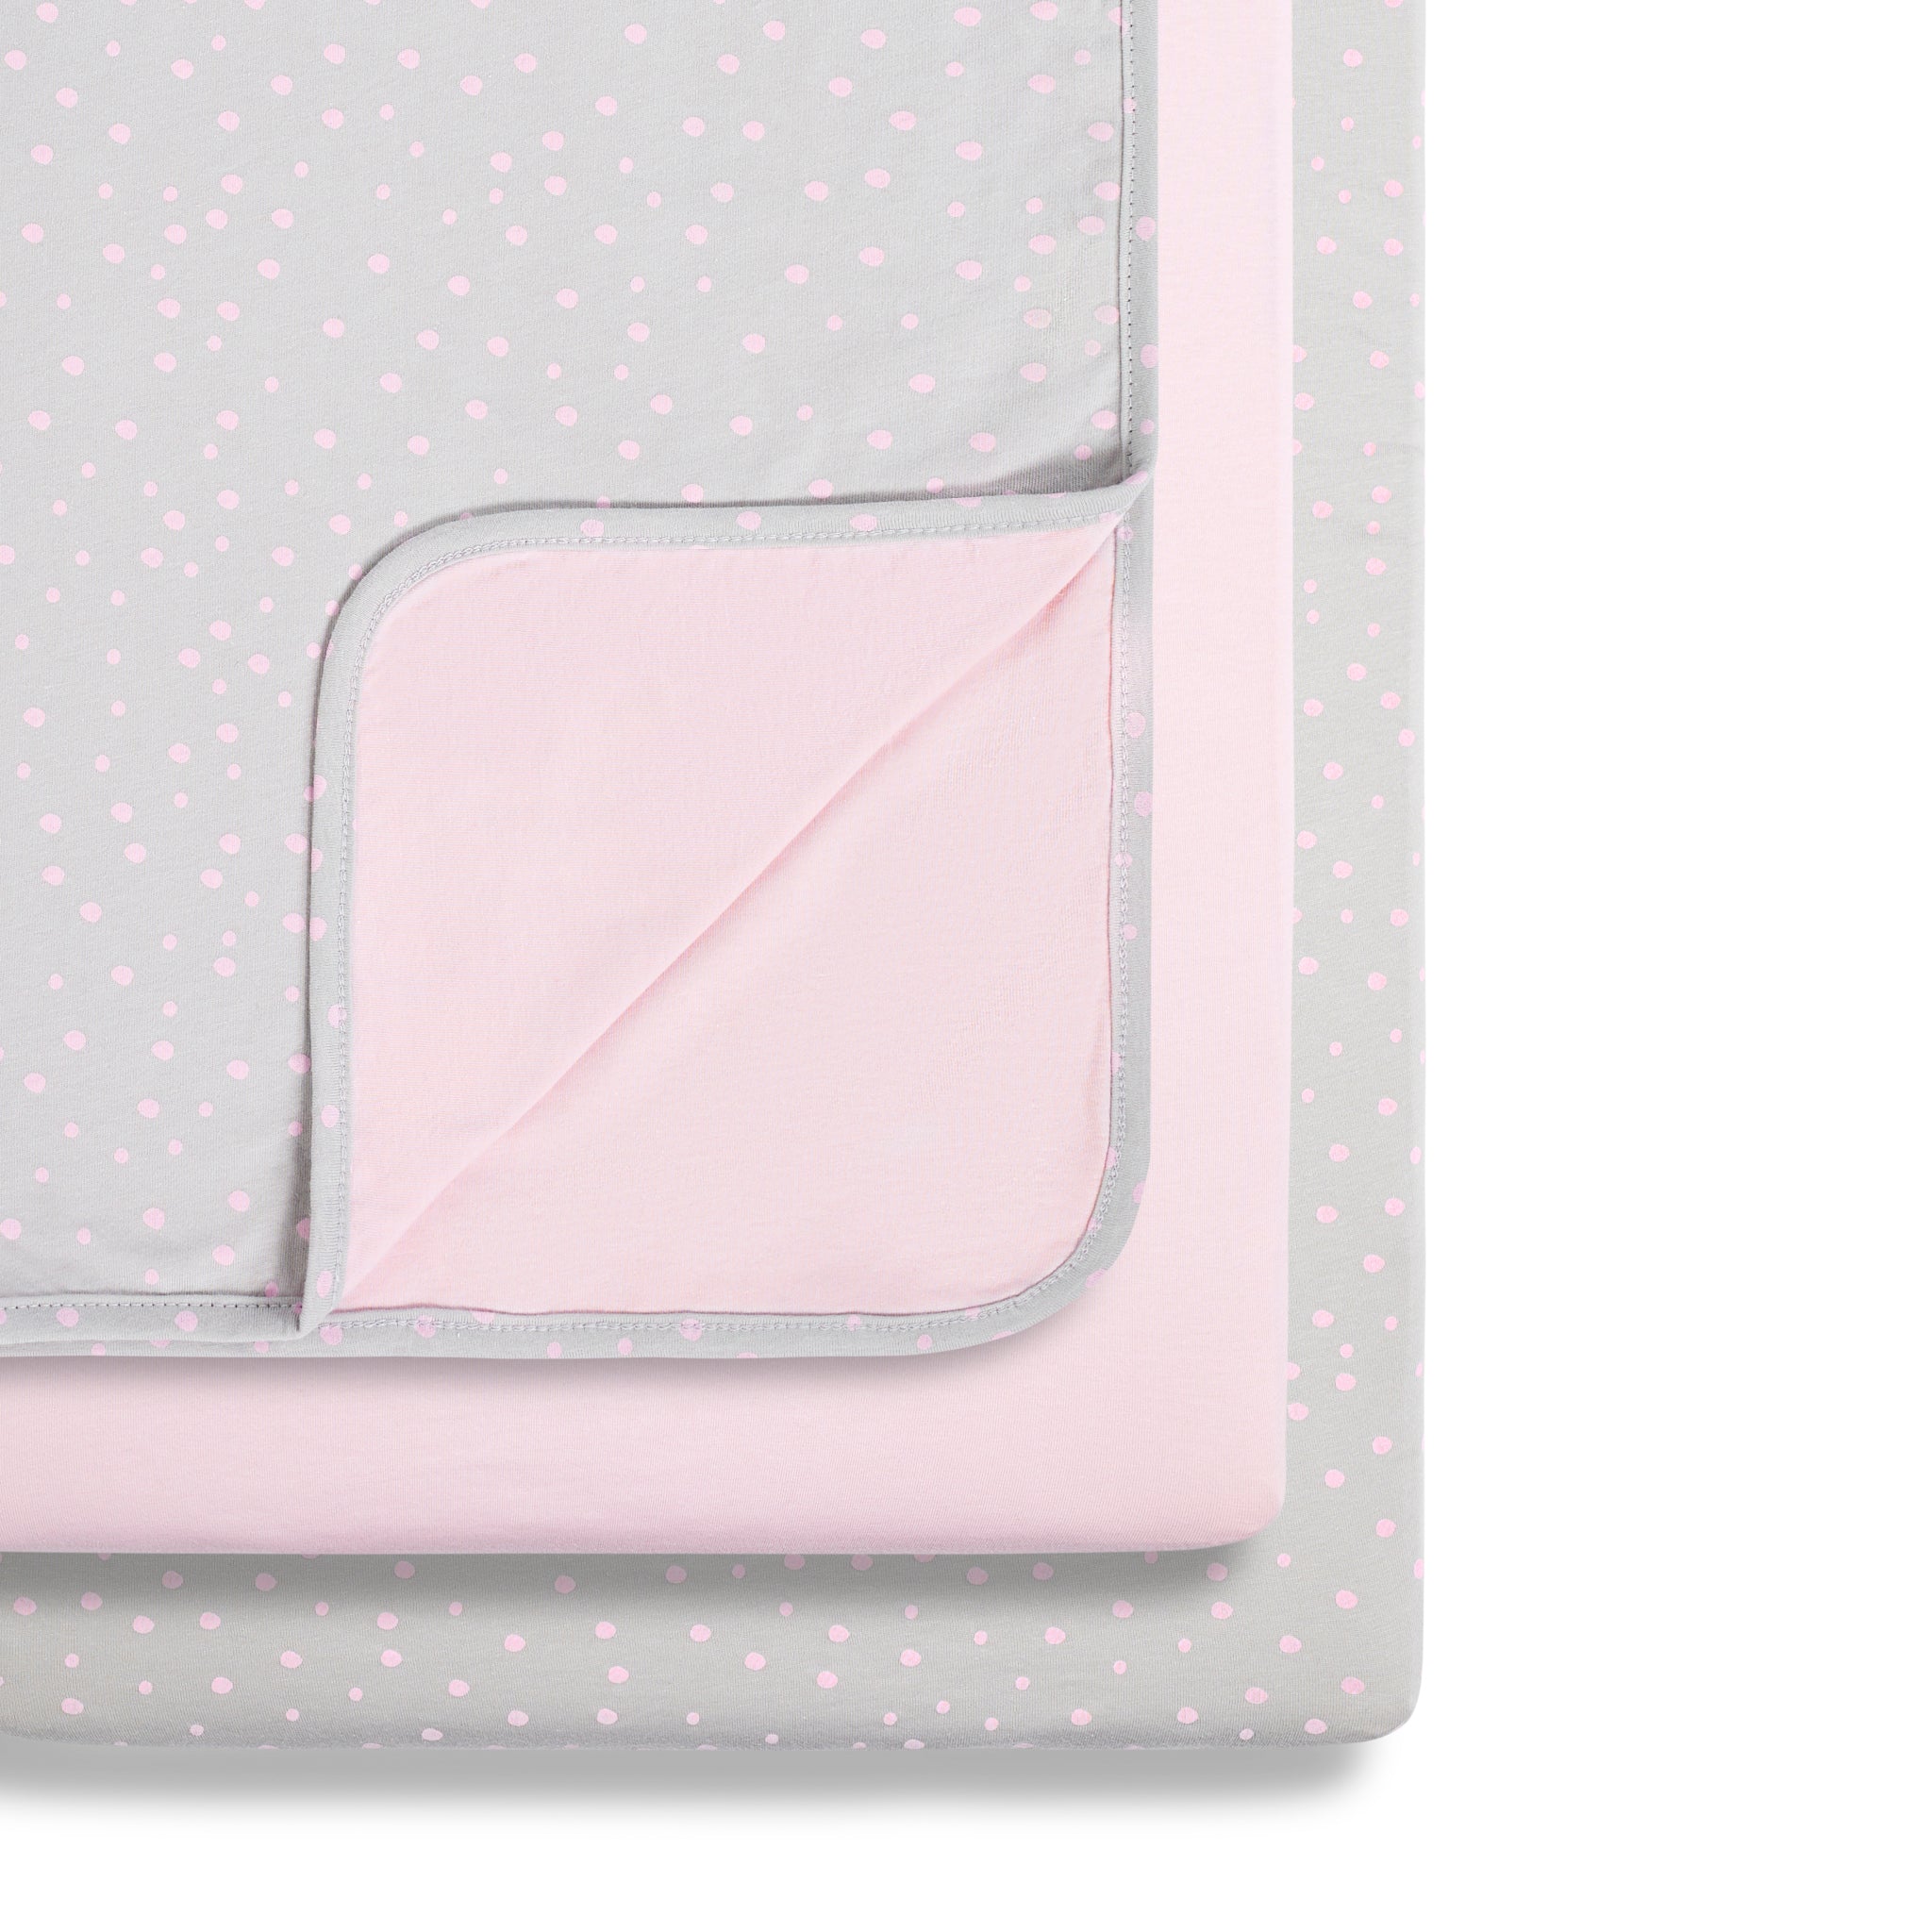 SnuzPod 3 Piece Crib Bedding Set x2 Sheets & x1 Blanket - Pink Spot